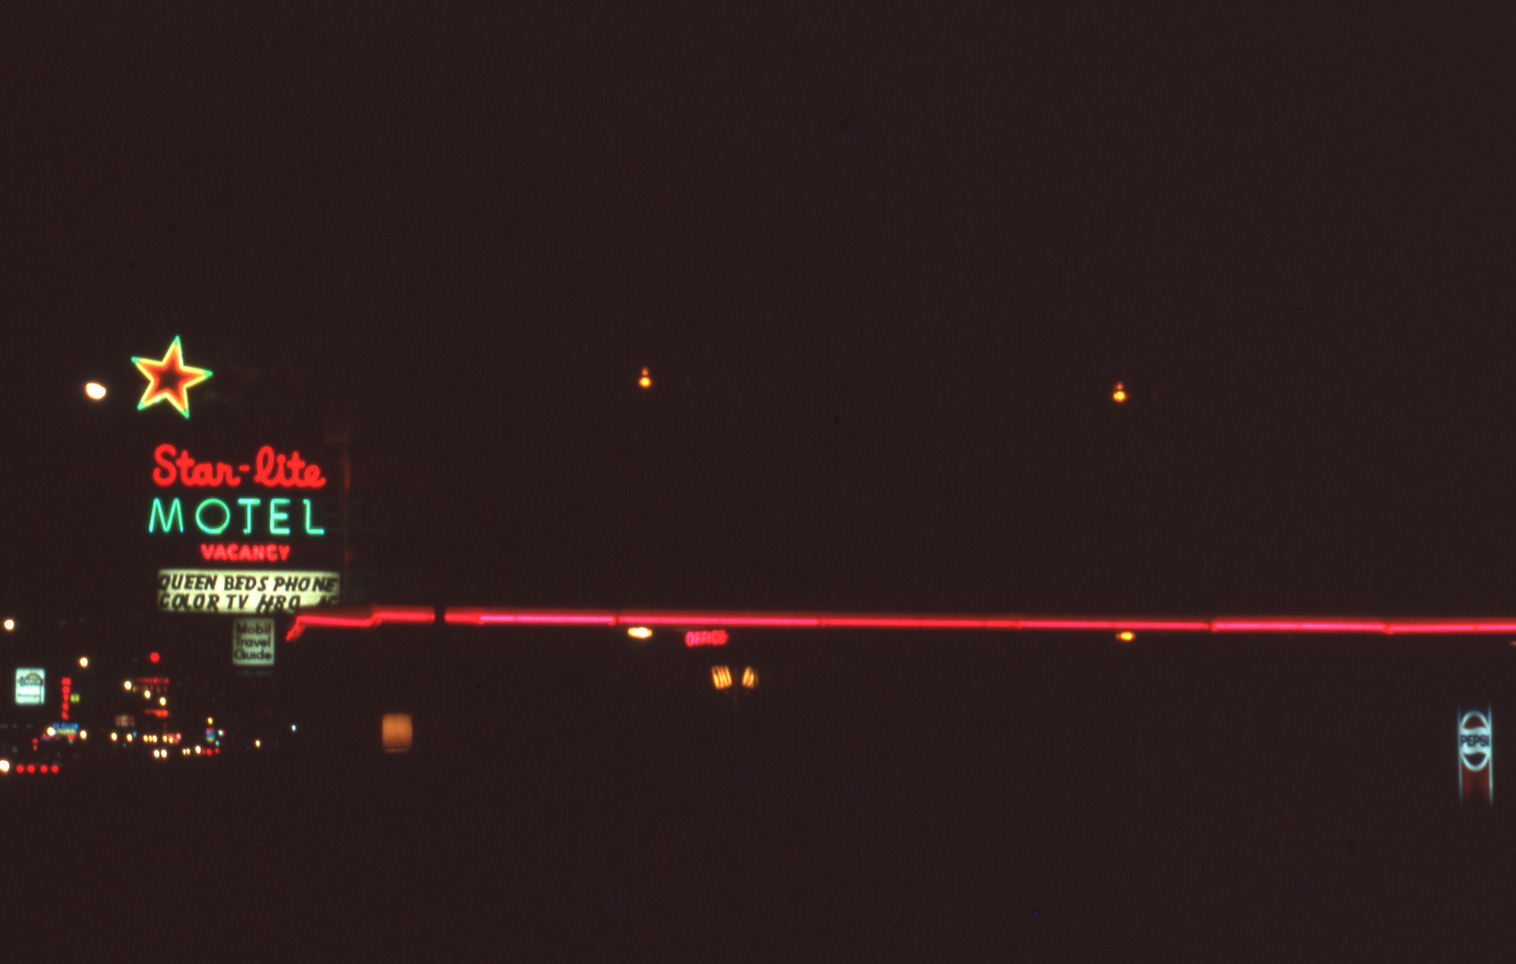 Star-Lite Motel pylon sign, Elko, Nevada: photographic print